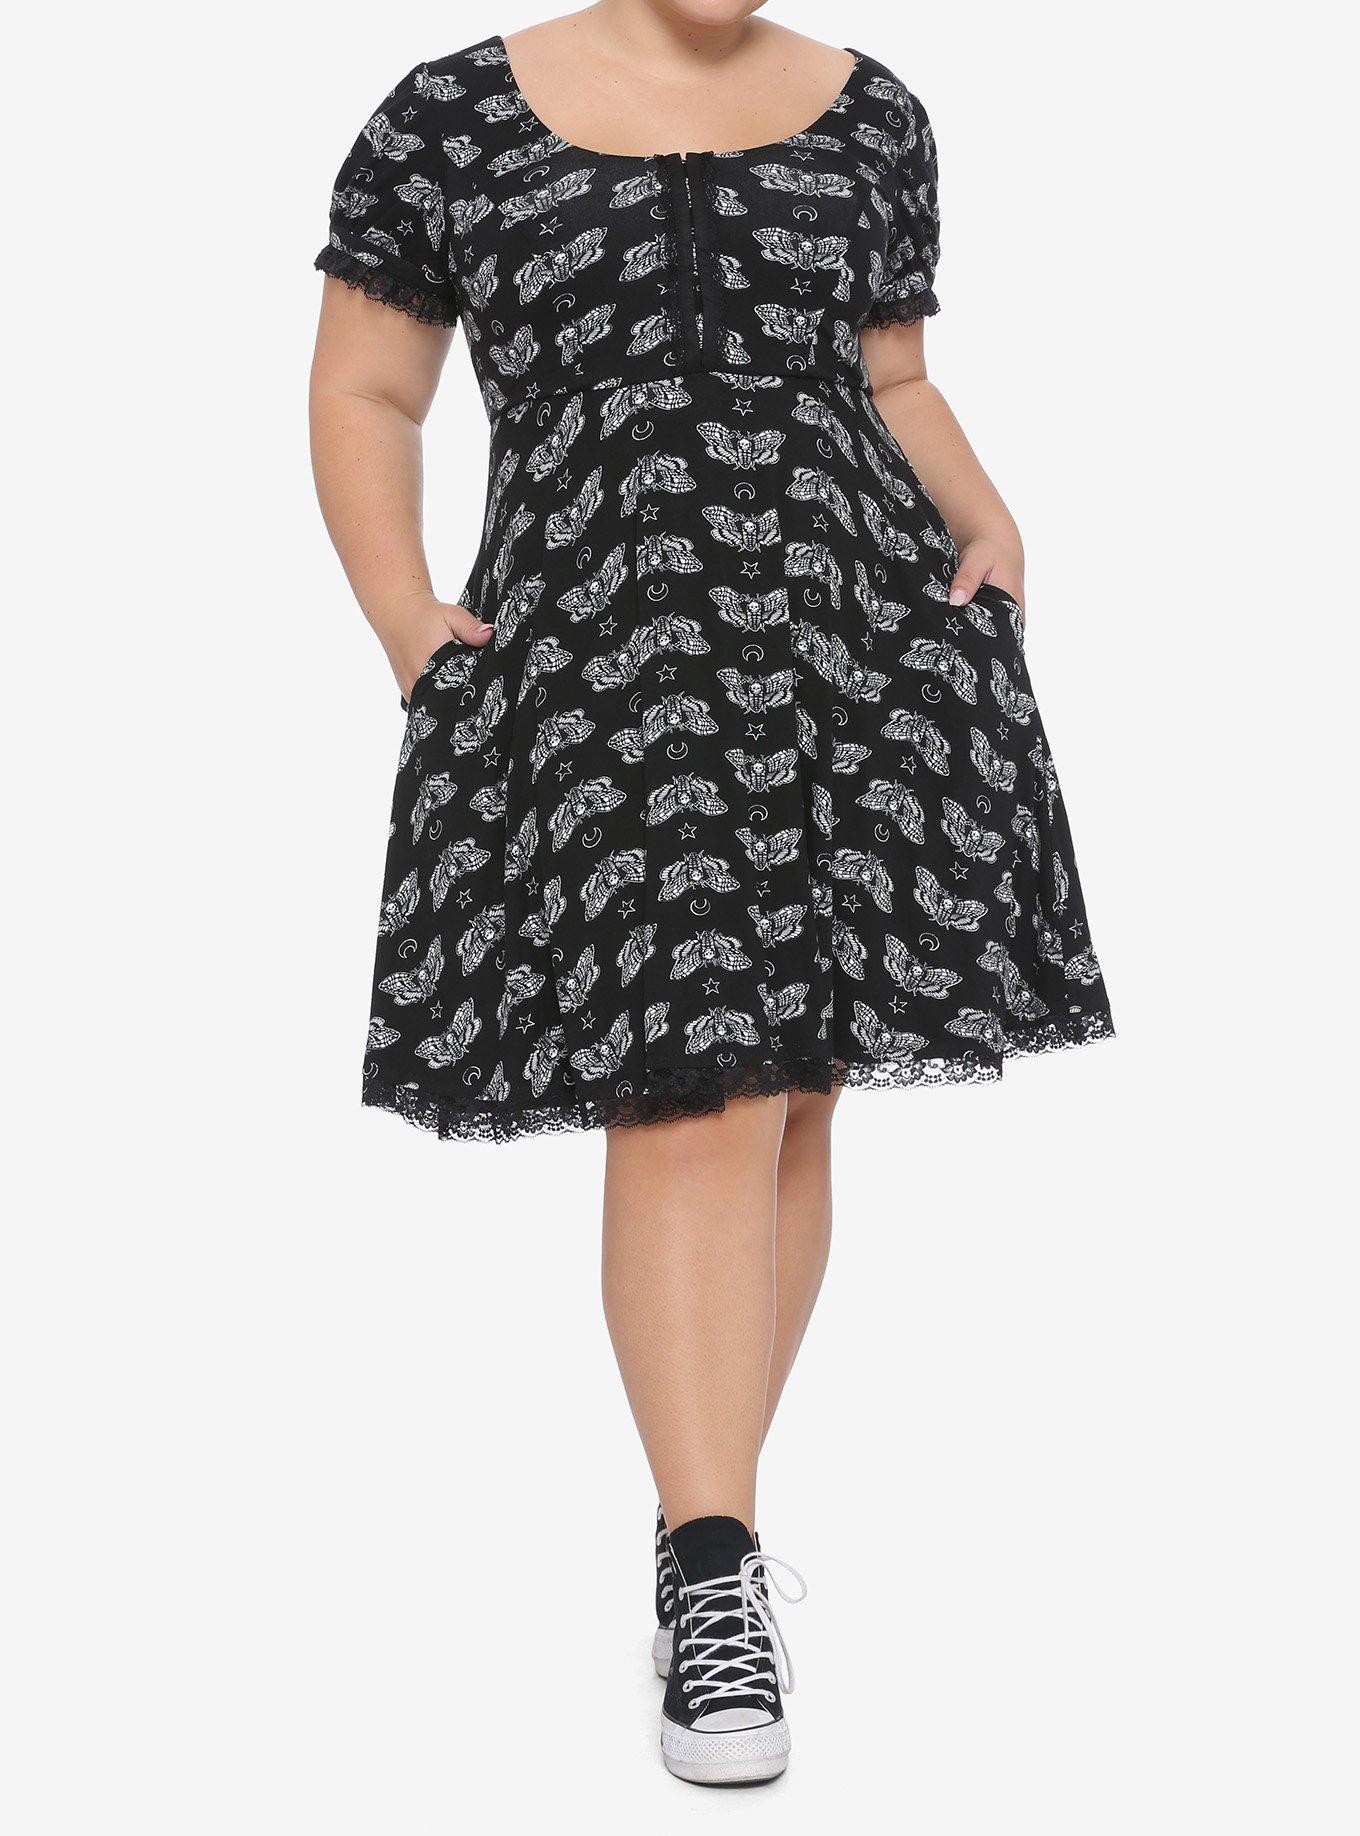 Black & White Moth Print Dress Plus Size, BLACK, alternate